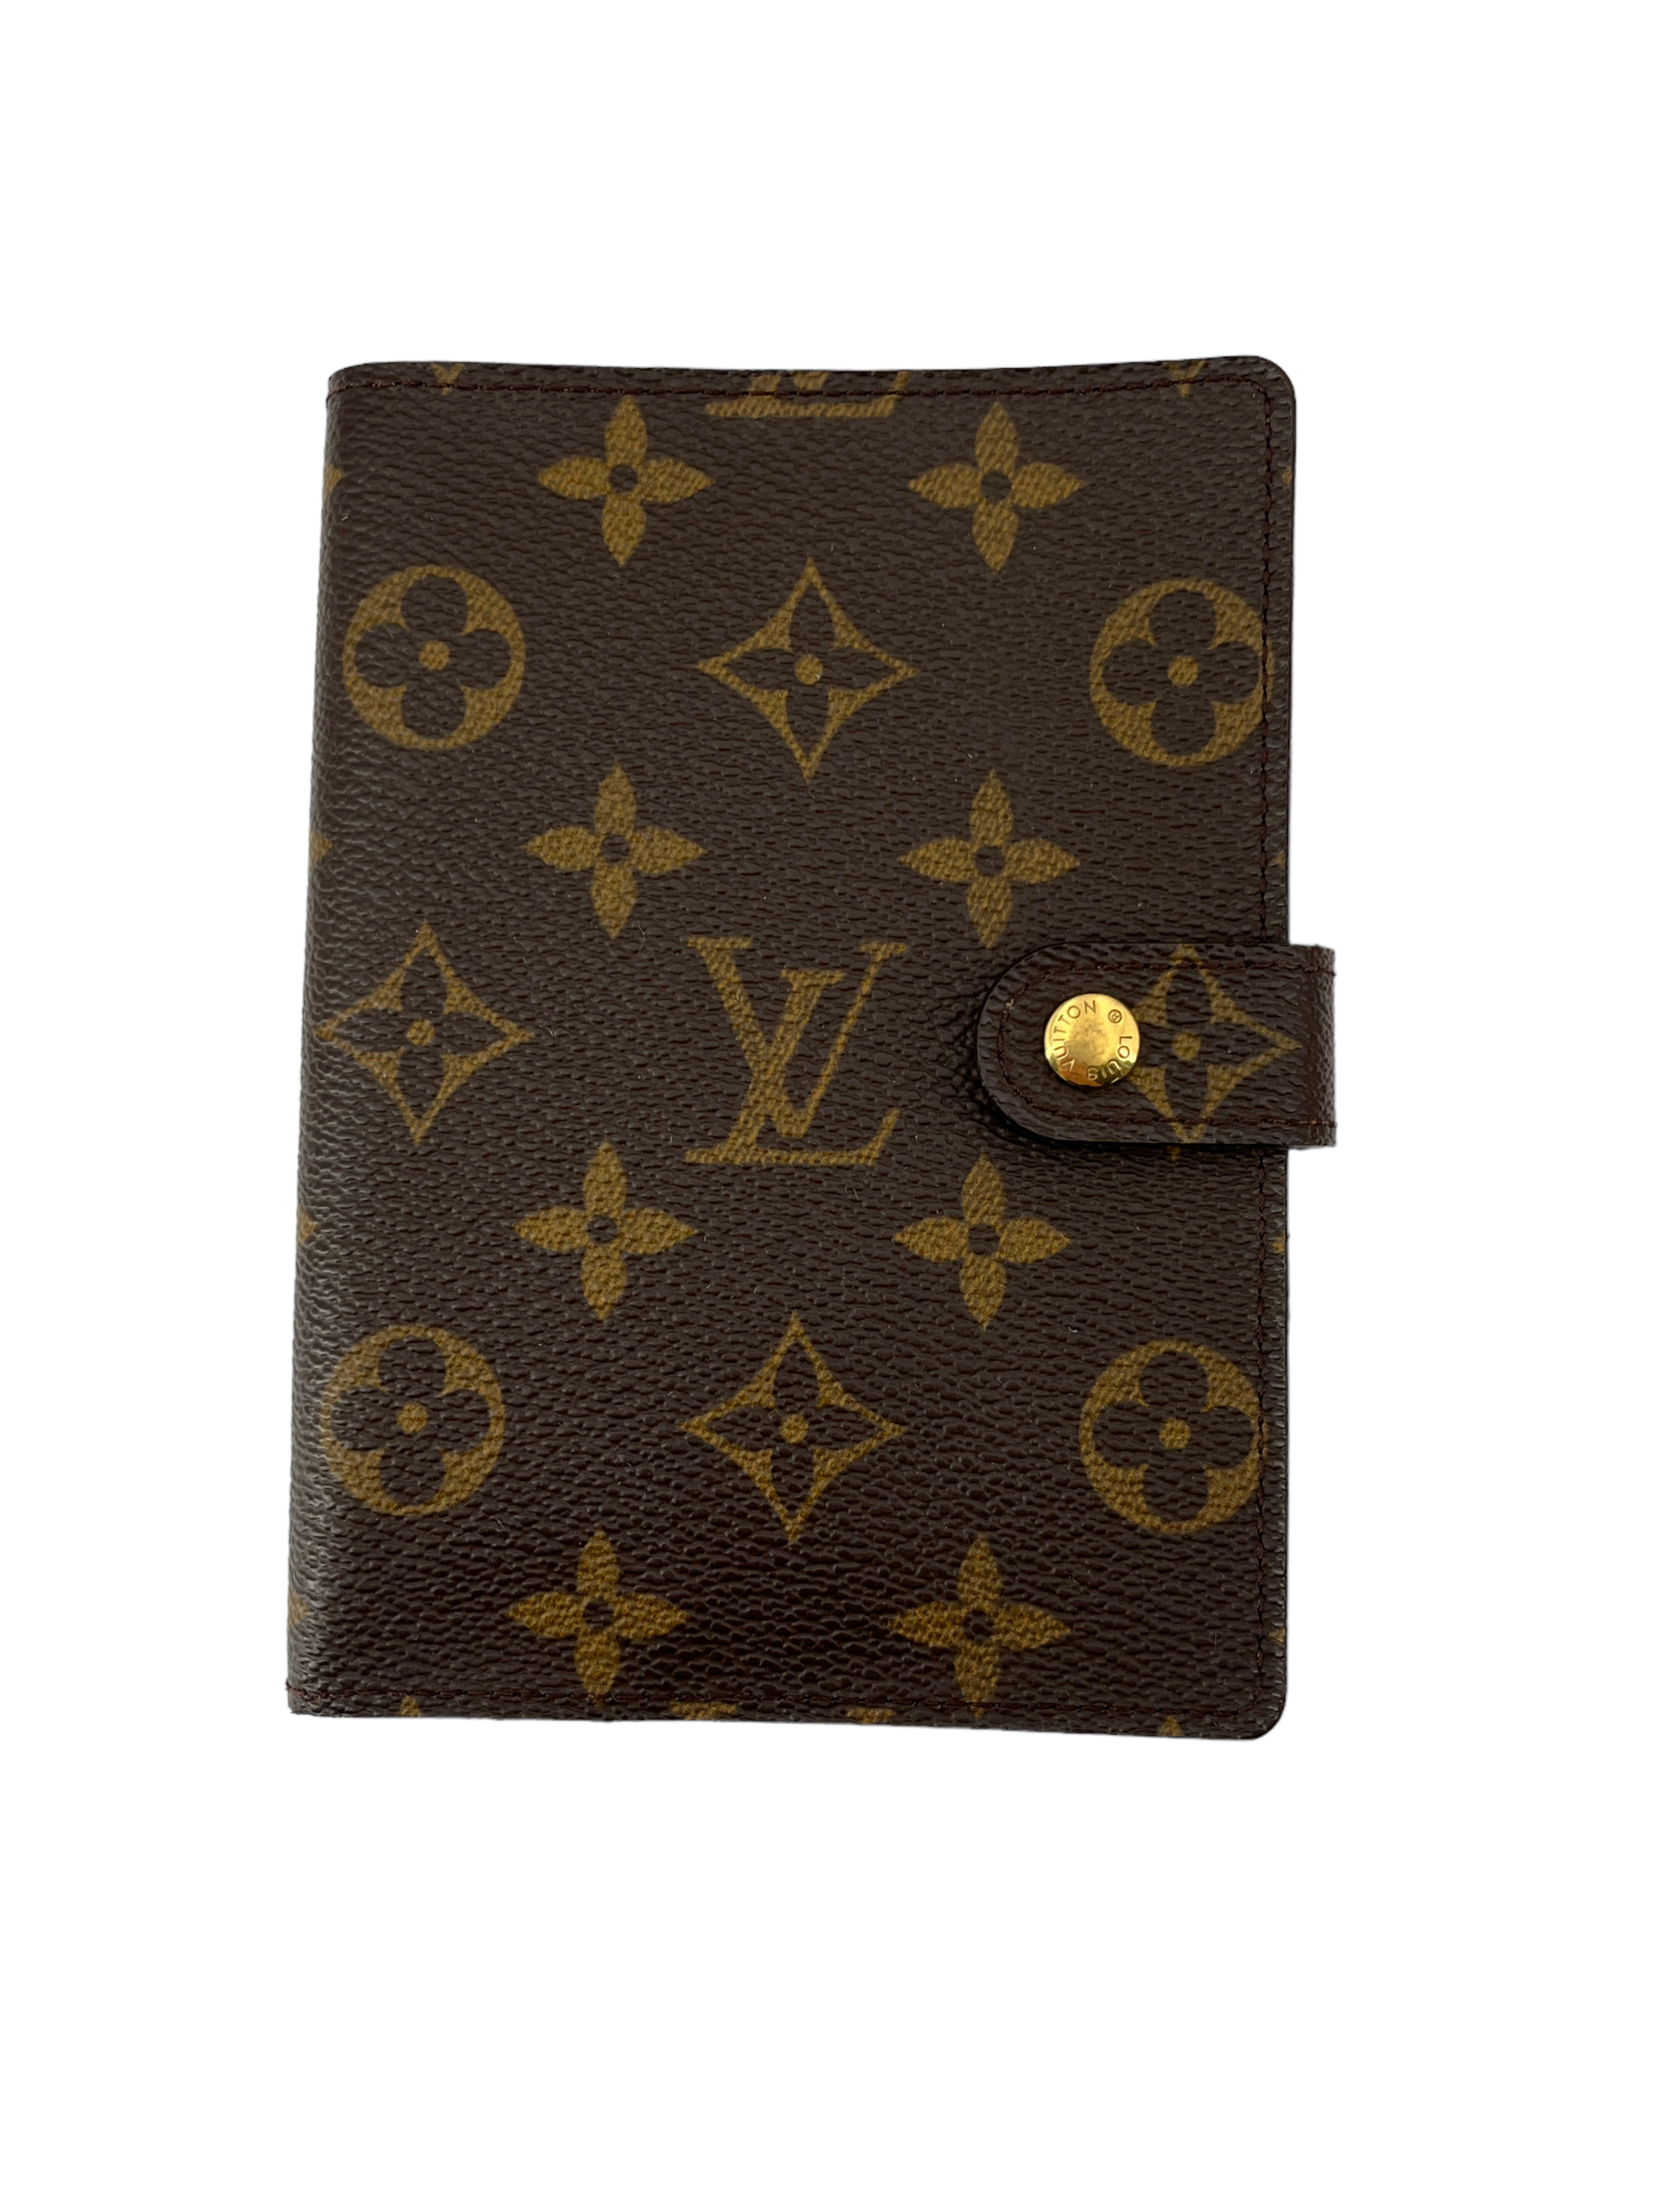 Louis Vuitton, Bags, Sold Louis Vuitton Pm Agenda Limited Edition